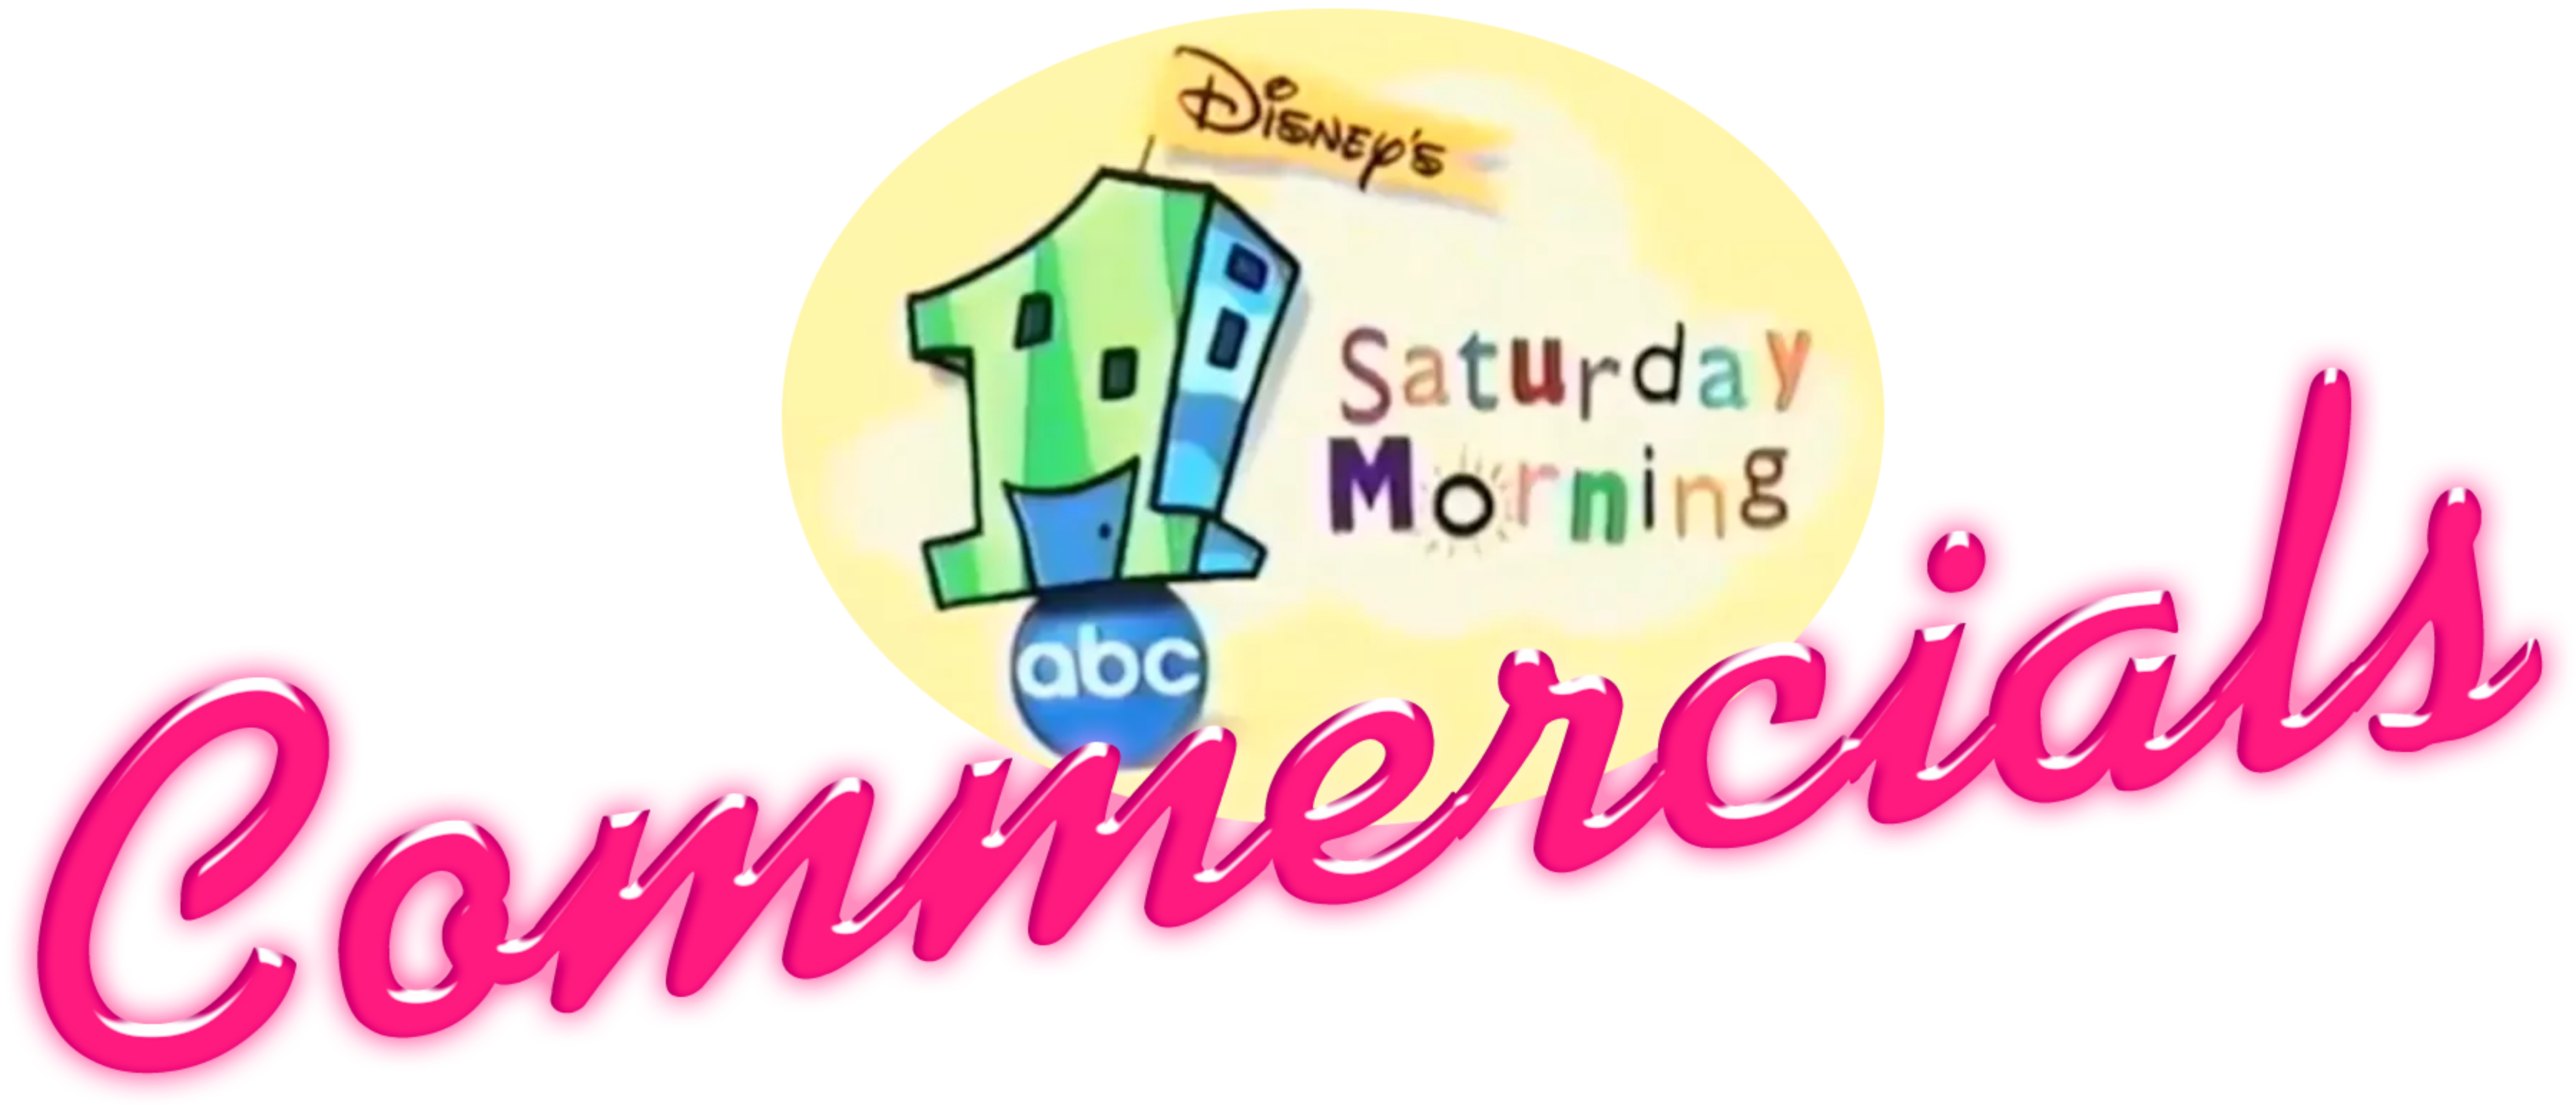 #20 Bonus Disc - 1 Saturday Morning Commercials Disc 1